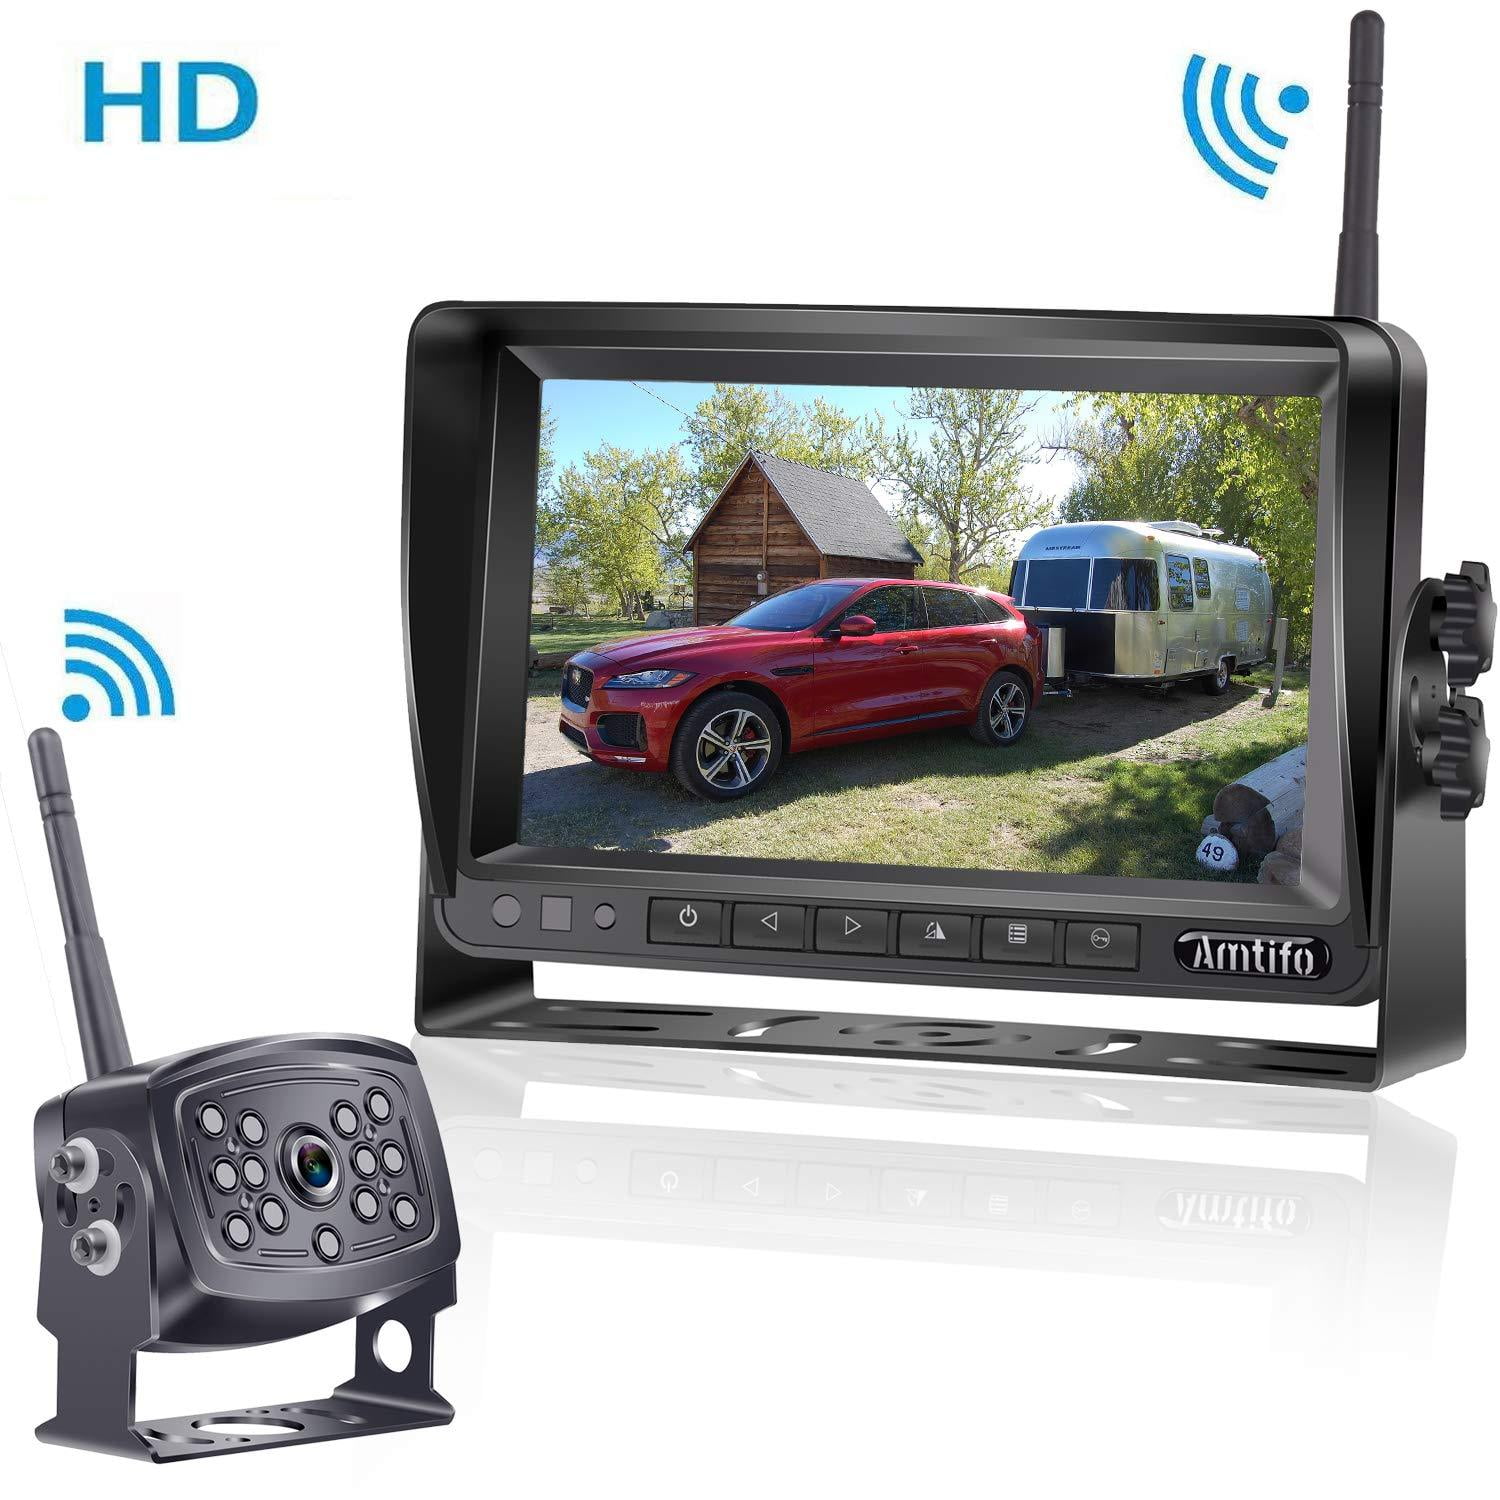 AMTIFO HD 960P Digital Wireless Backup Camera with 7 Inch Monitor for RVs,Trucks,Trailers